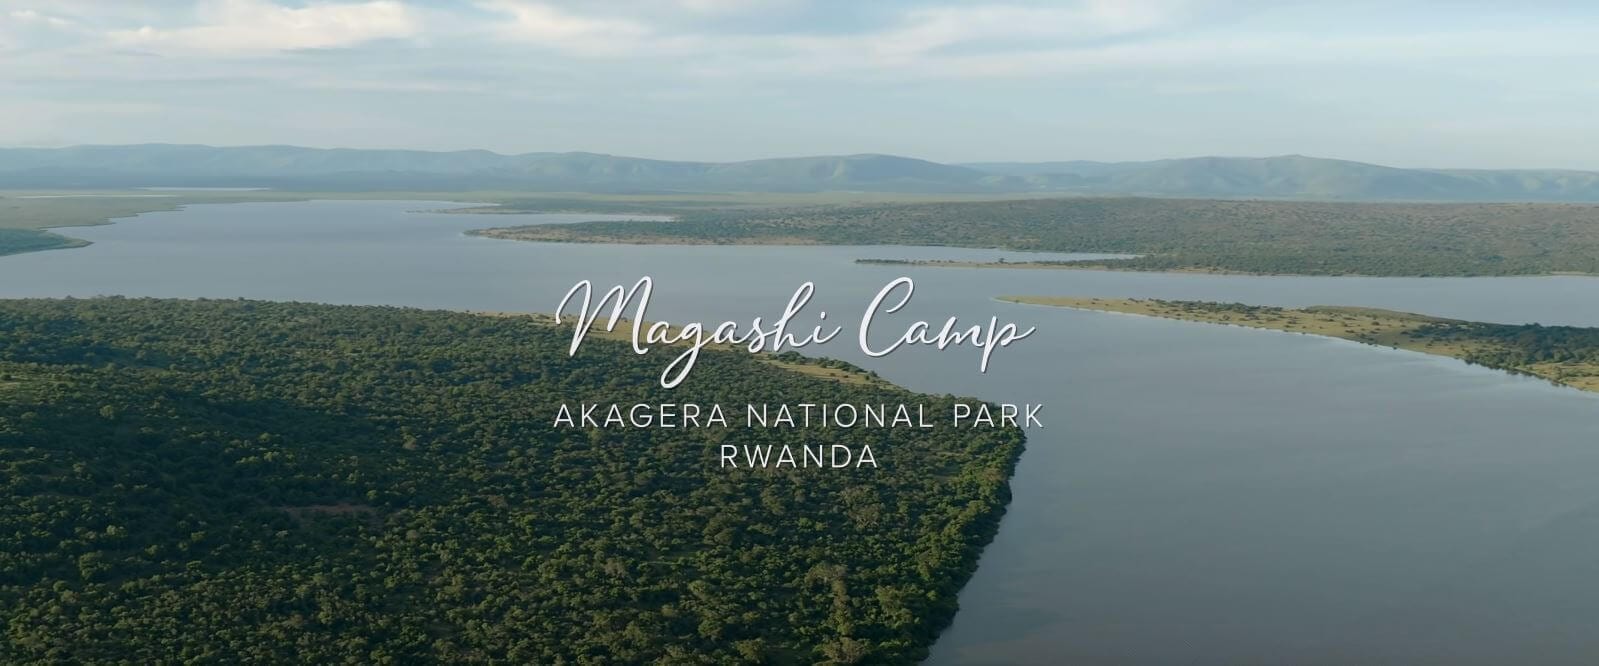 Magashi Camp Akagera National Park Rwanda